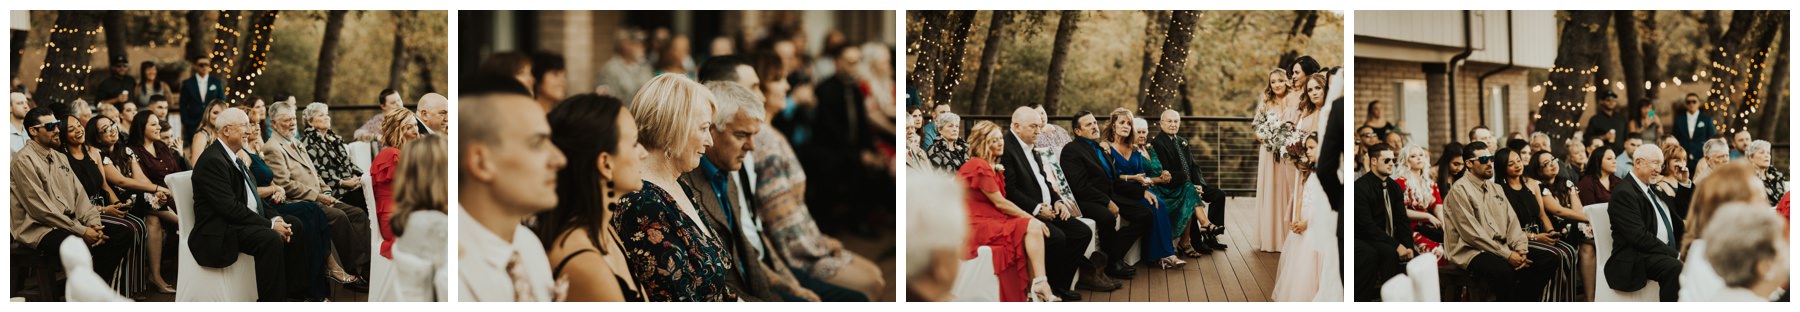 wedding guests candid